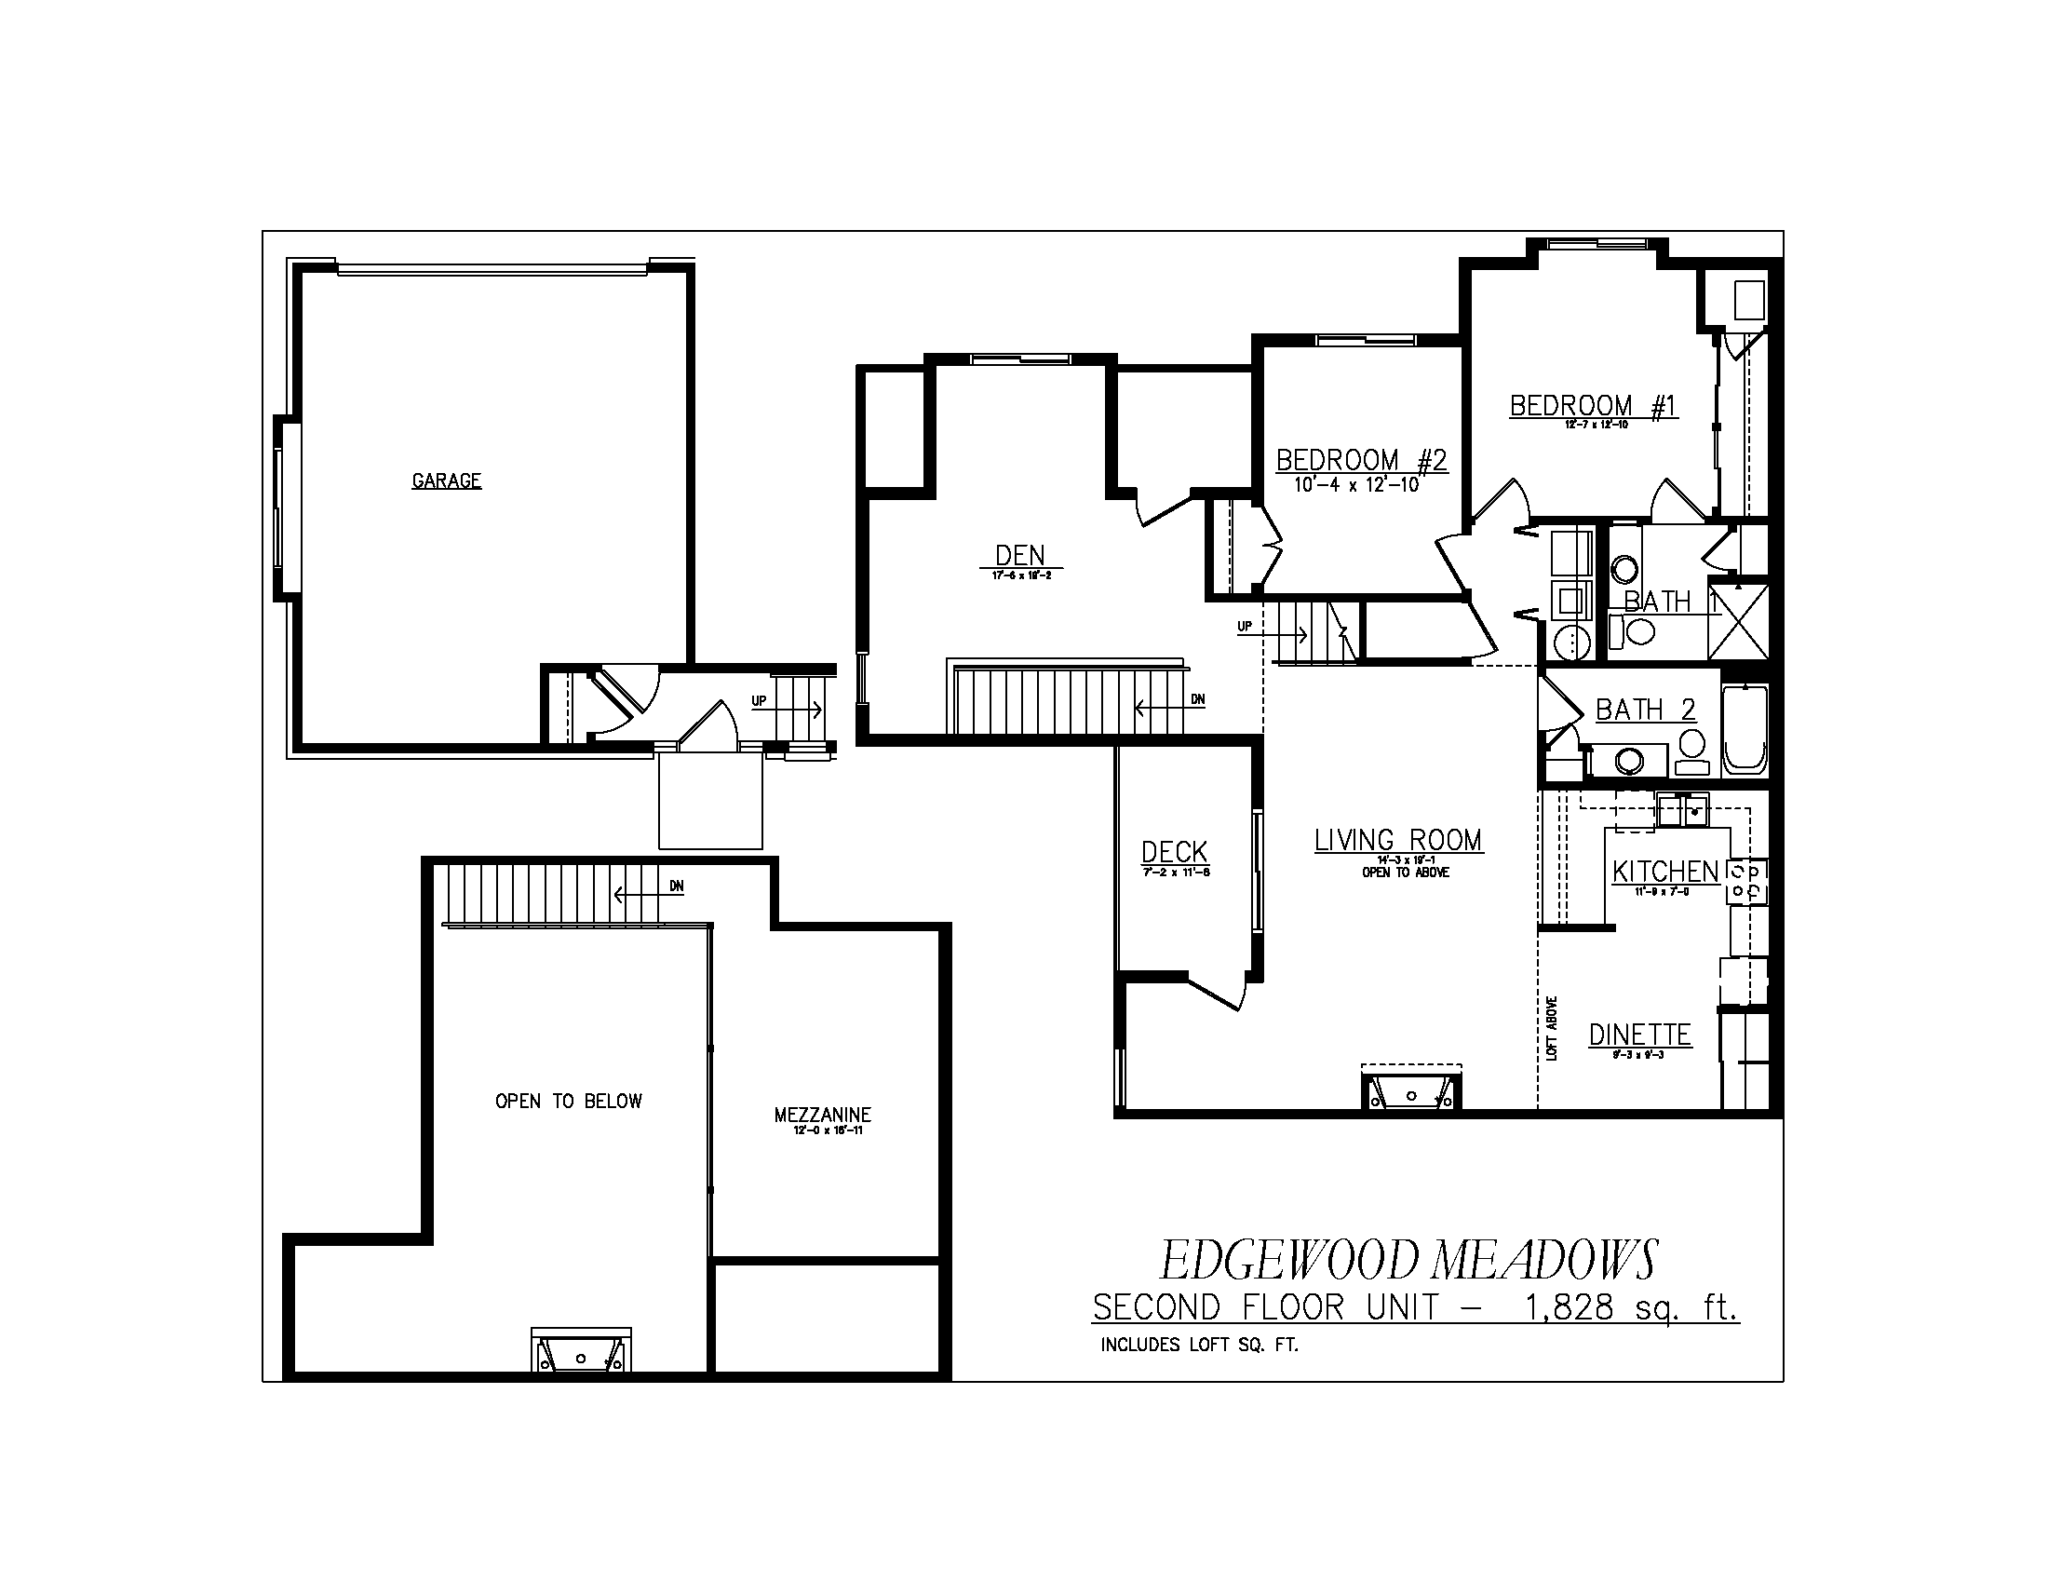 Edgewood Meadows condo 2nd floor unit plans